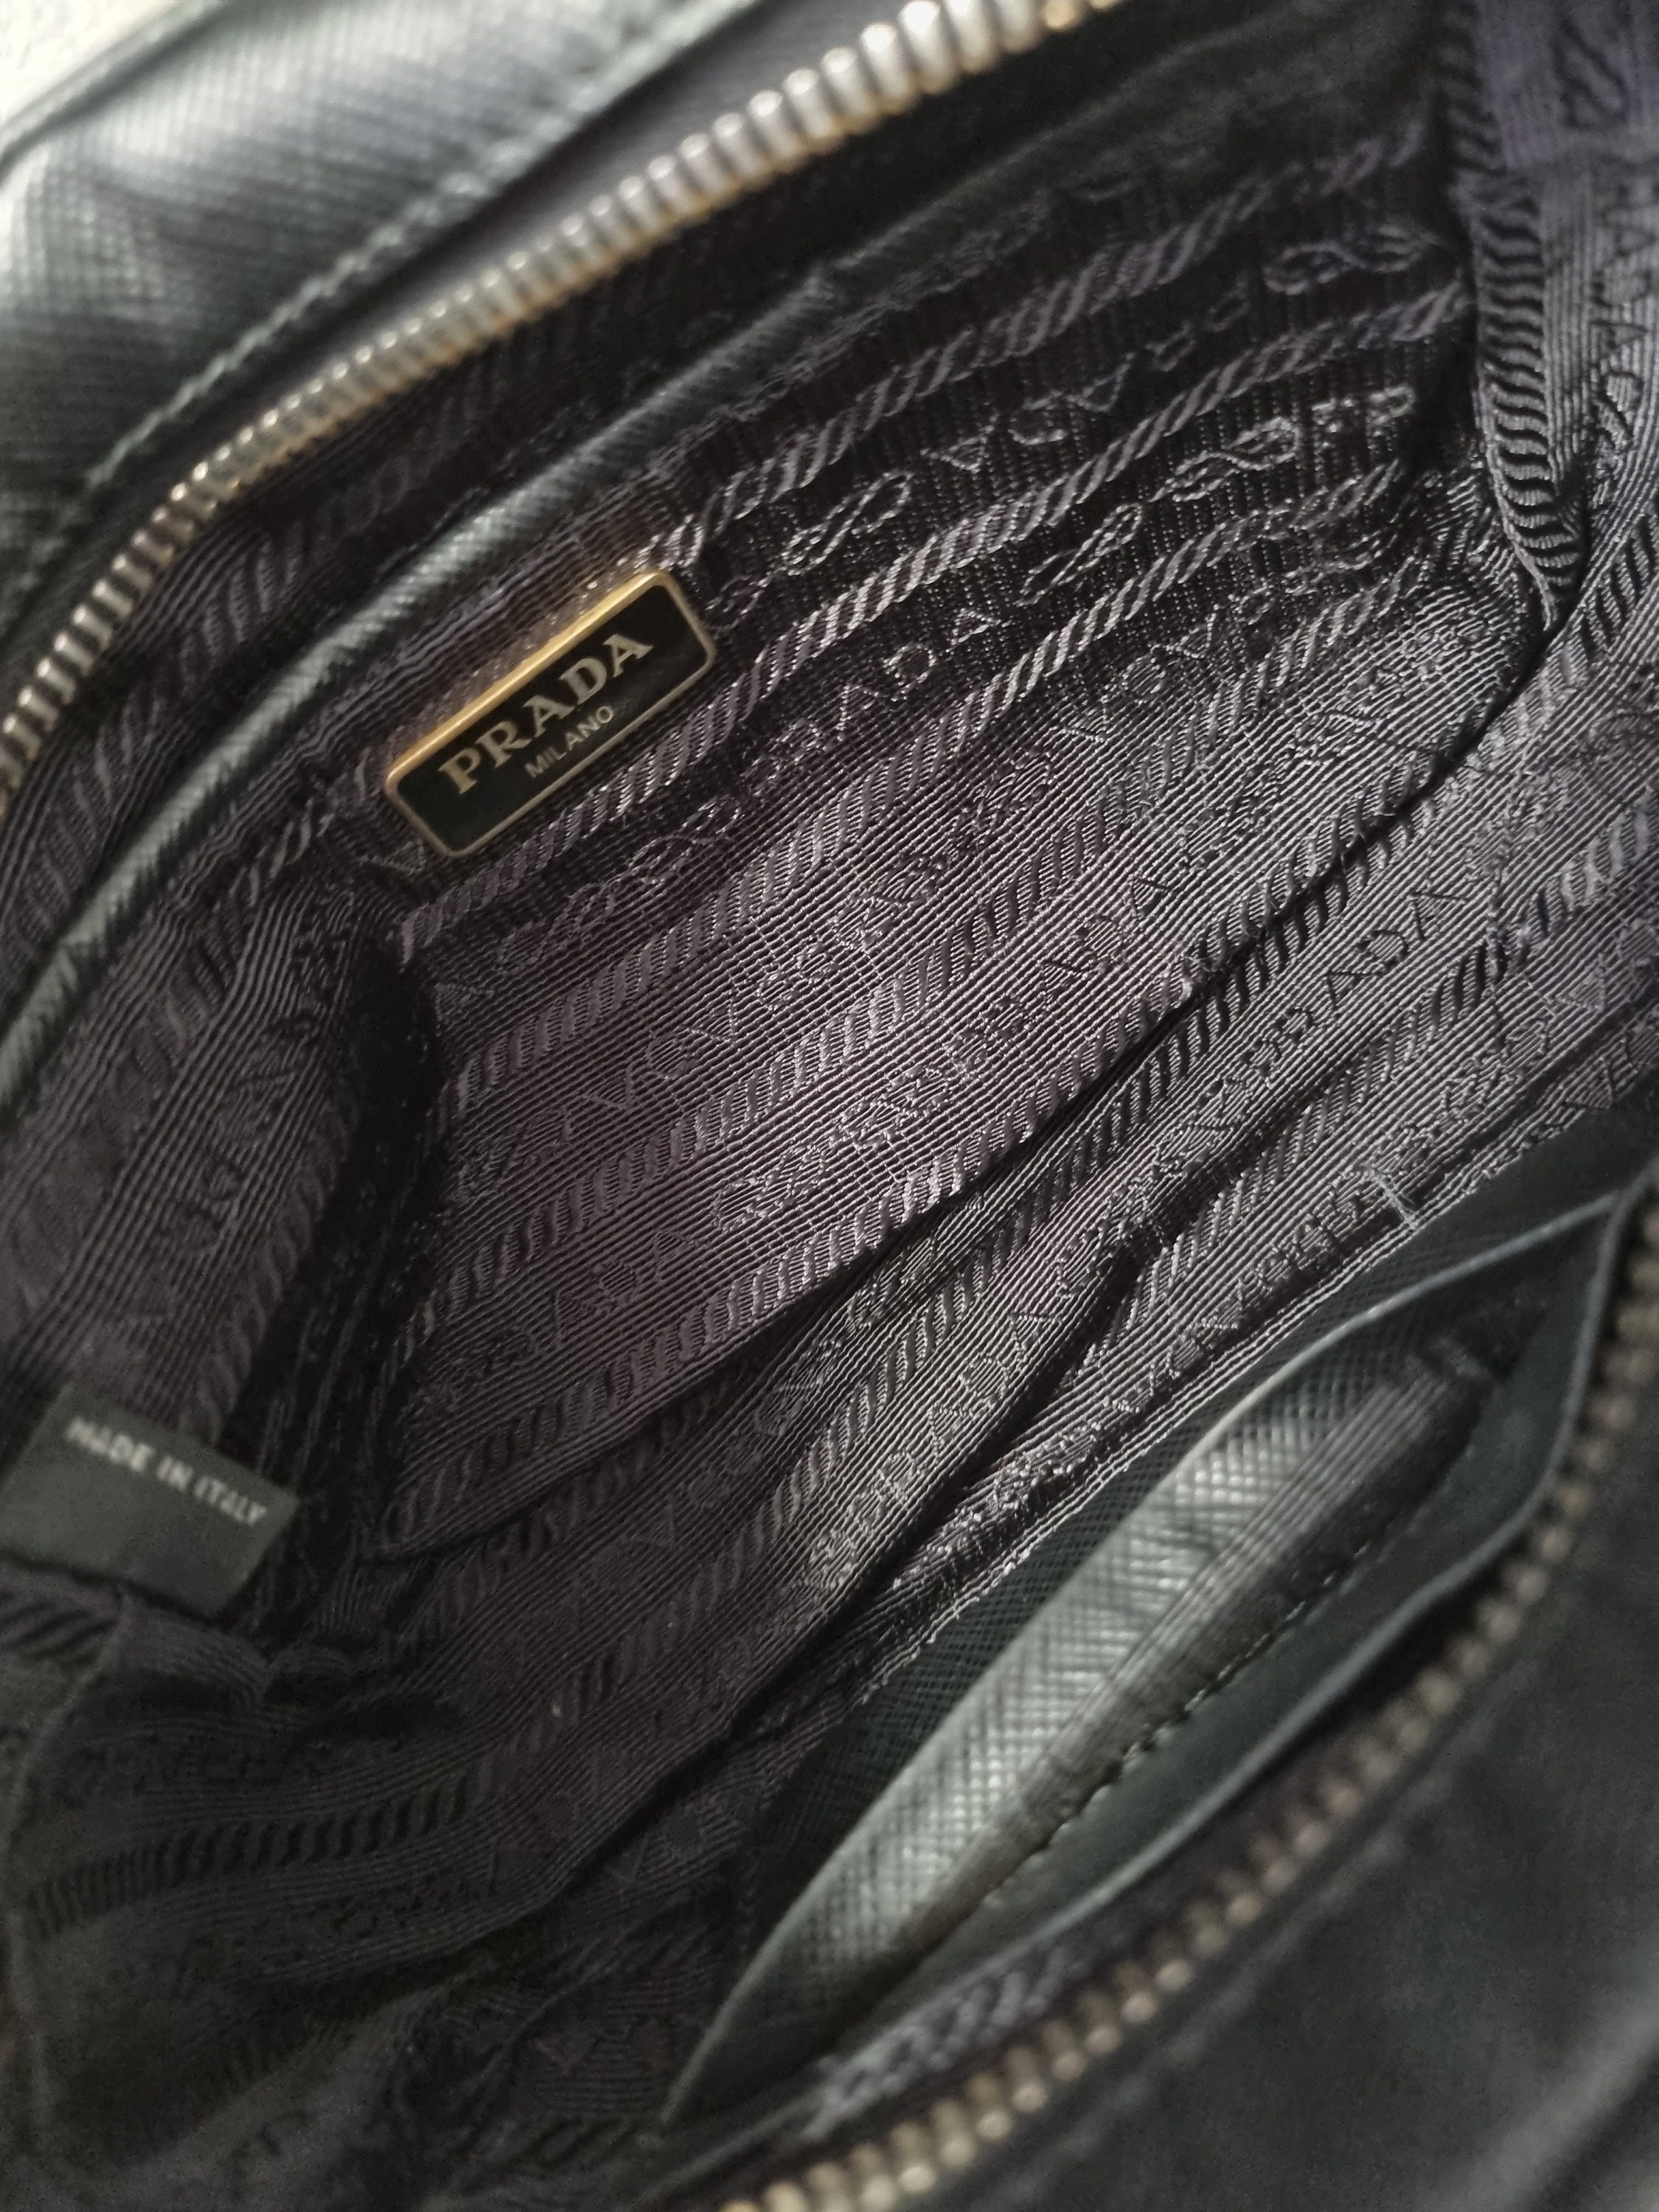 Authentic Prada Saffiano Leather Camera Bag 